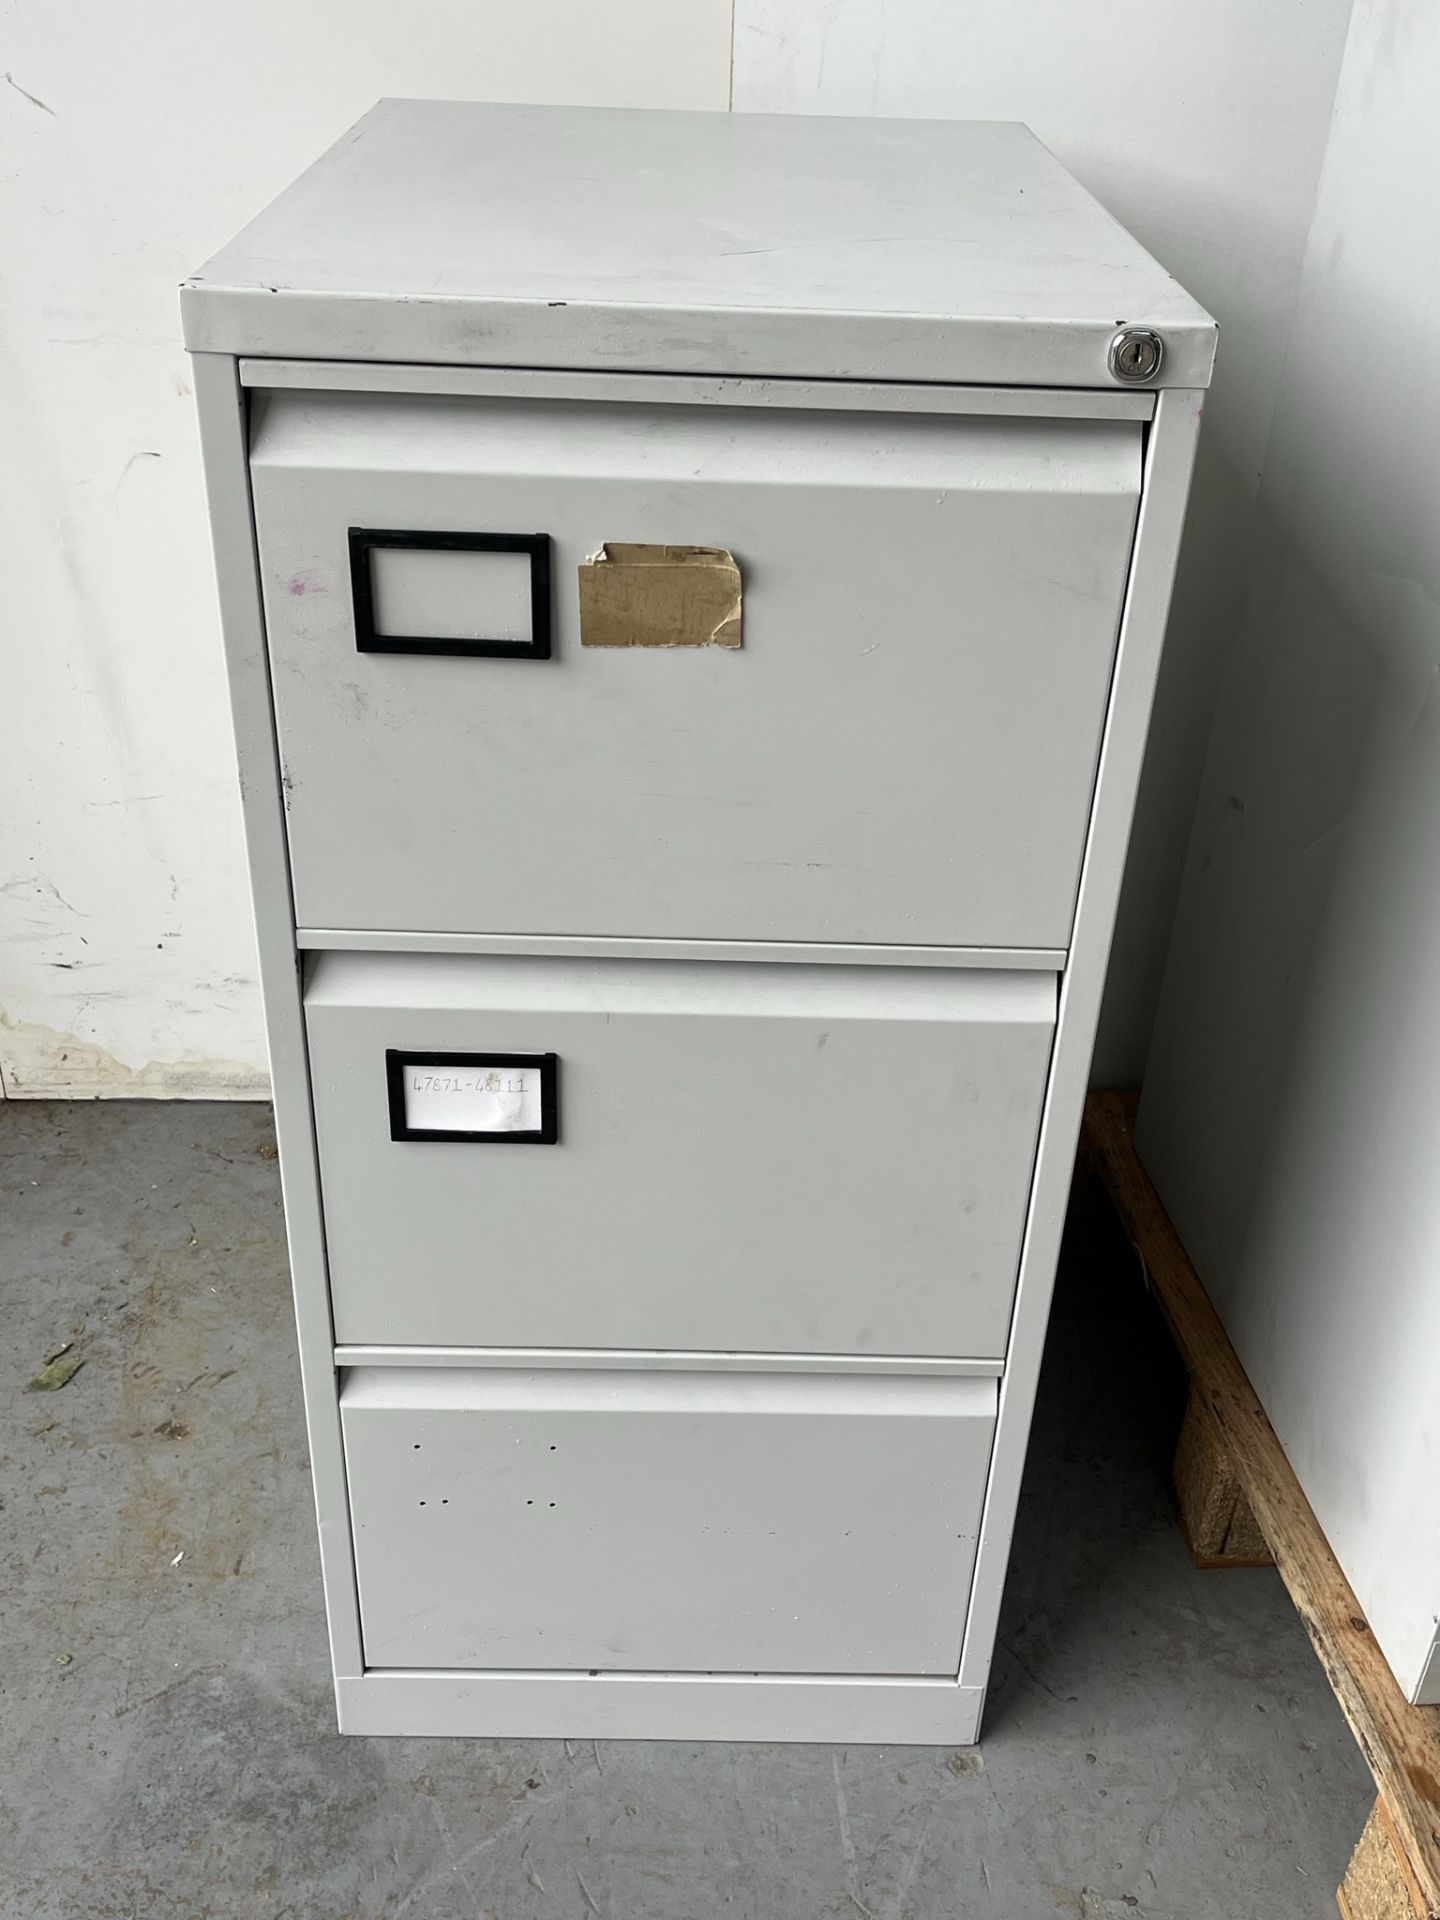 3 x Unbranded Metal 3 Drawer Filing Cabinets *Missing Keys* - Image 2 of 4